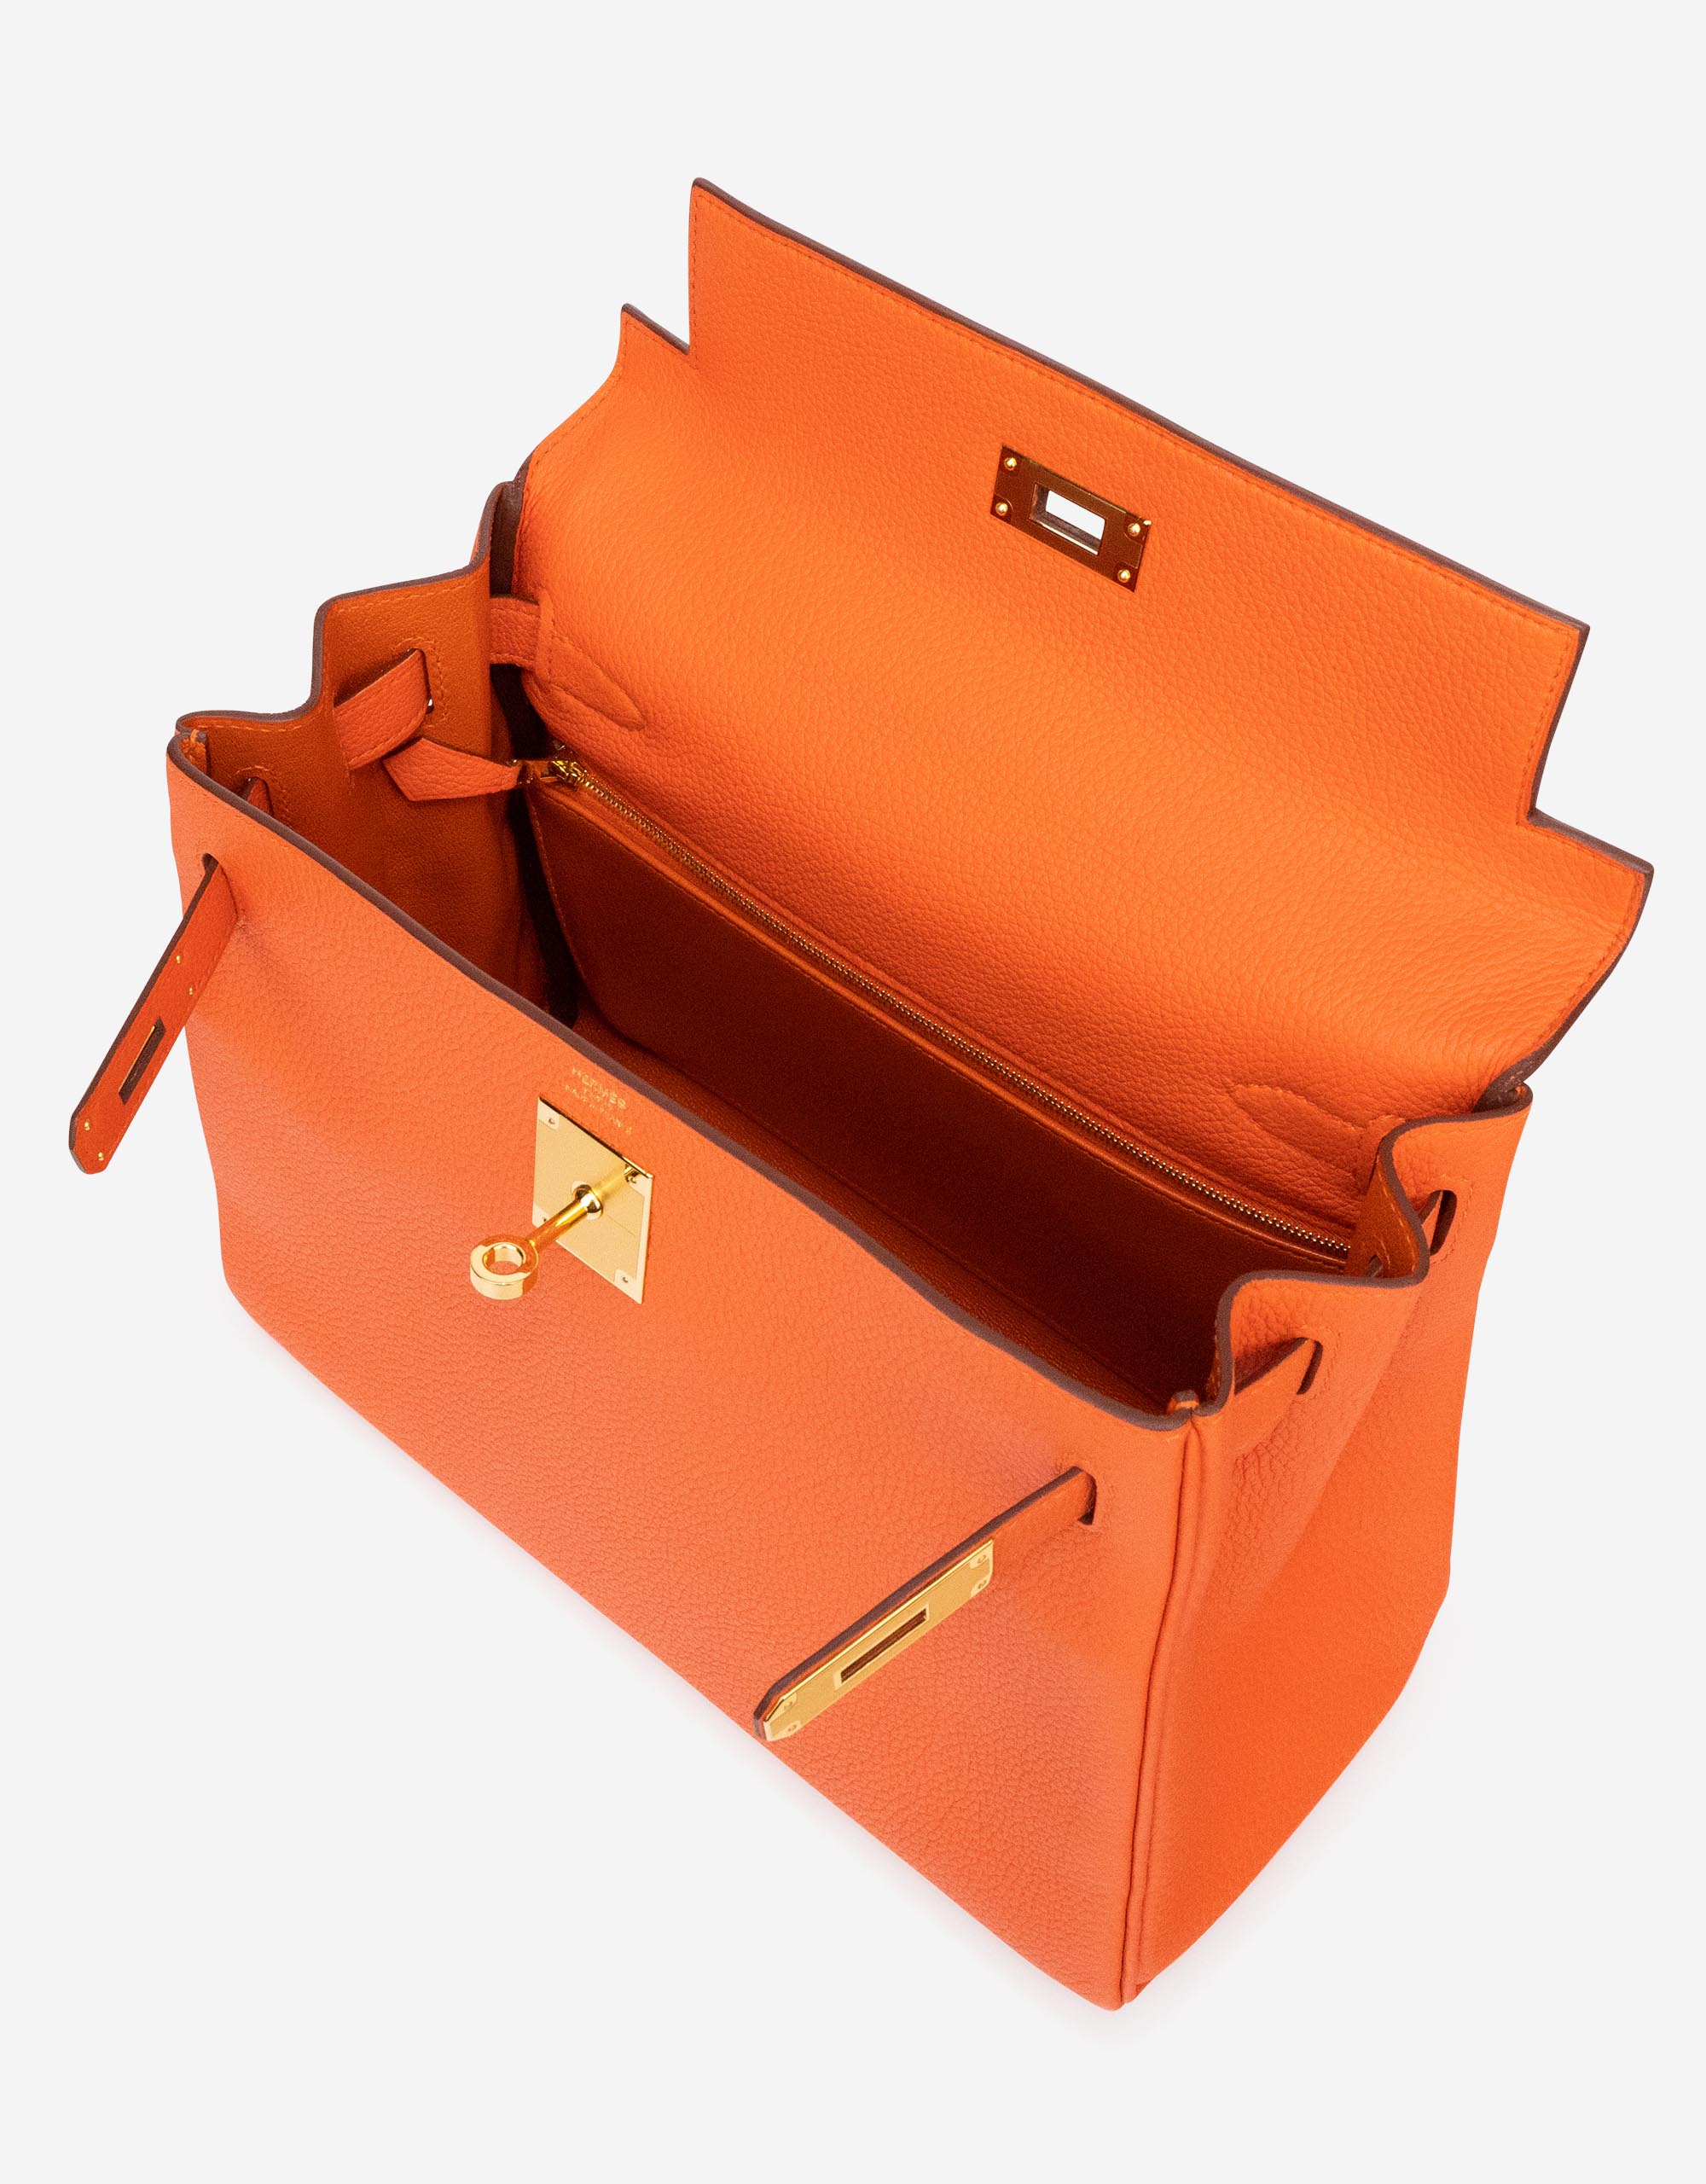 Hermès Kelly 28 Retourne Feu Orange Togo leather Gold Hardware